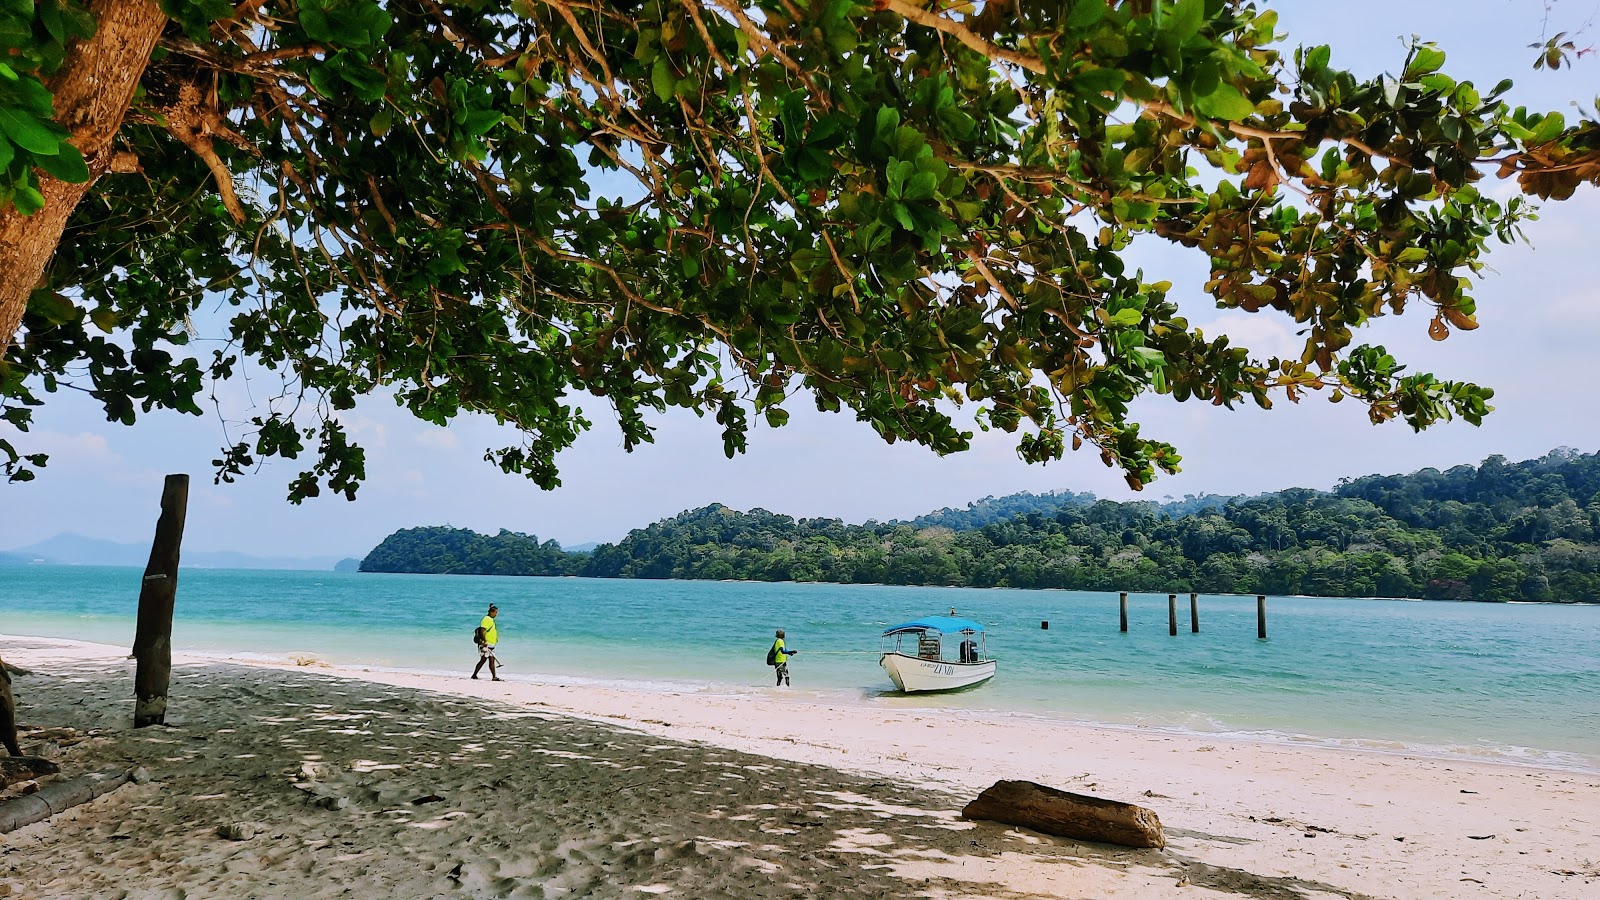 Foto de Beras Basah Beach - lugar popular entre os apreciadores de relaxamento